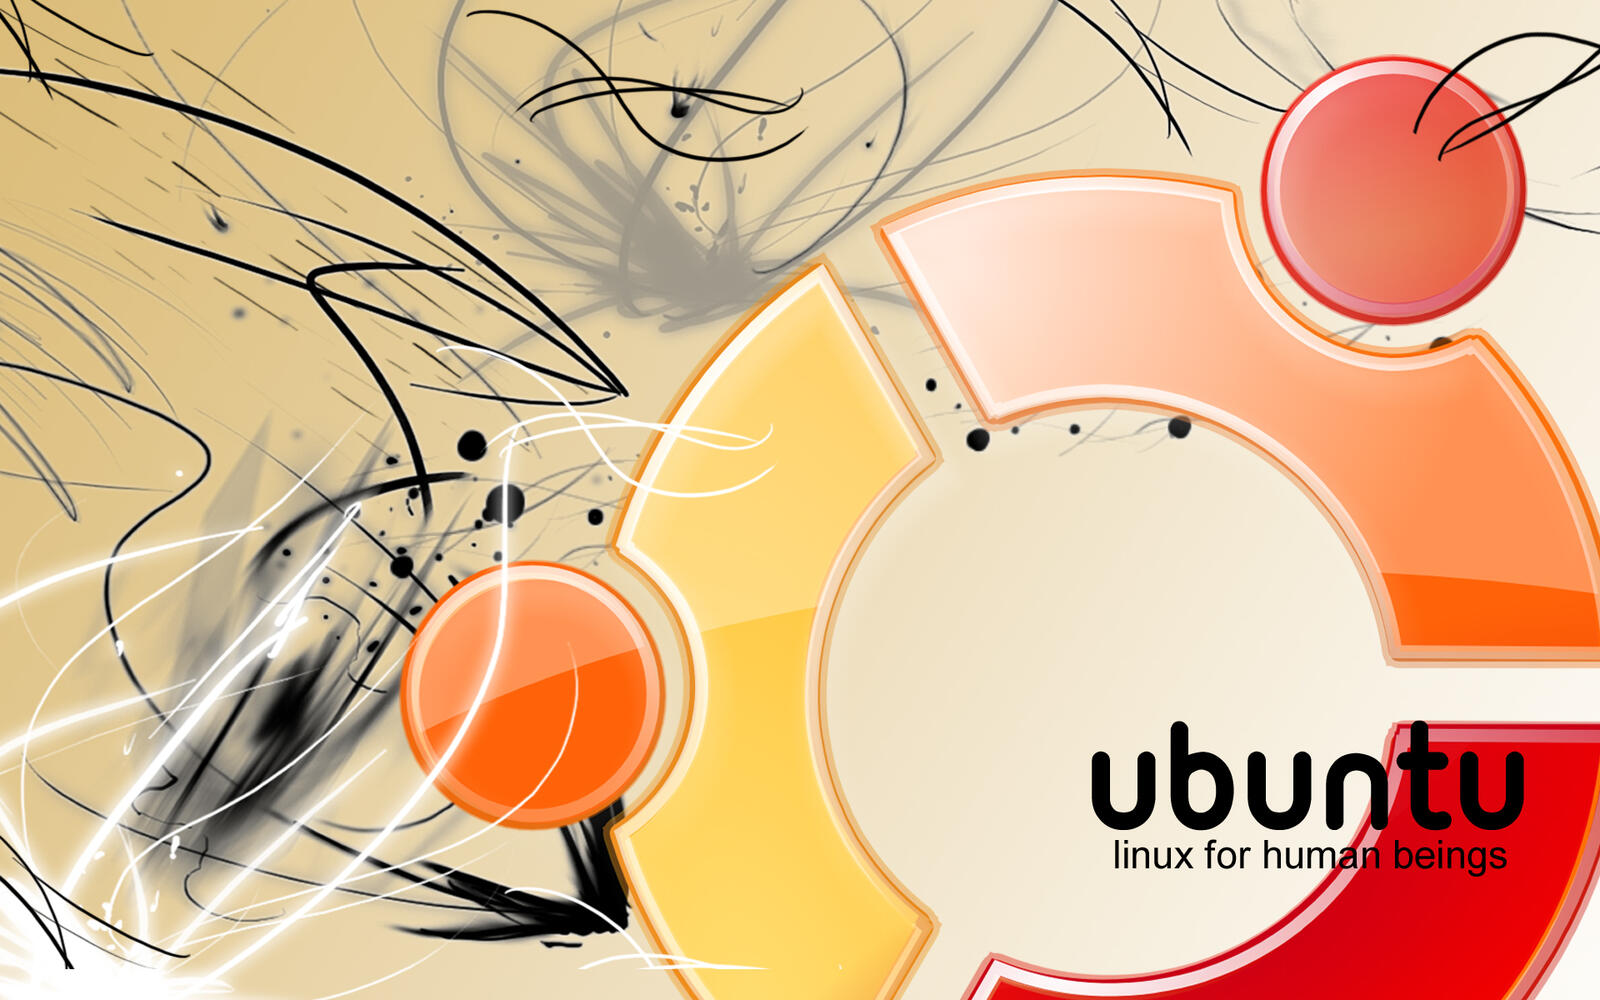 Wallpapers ubuntu logo operating system on the desktop